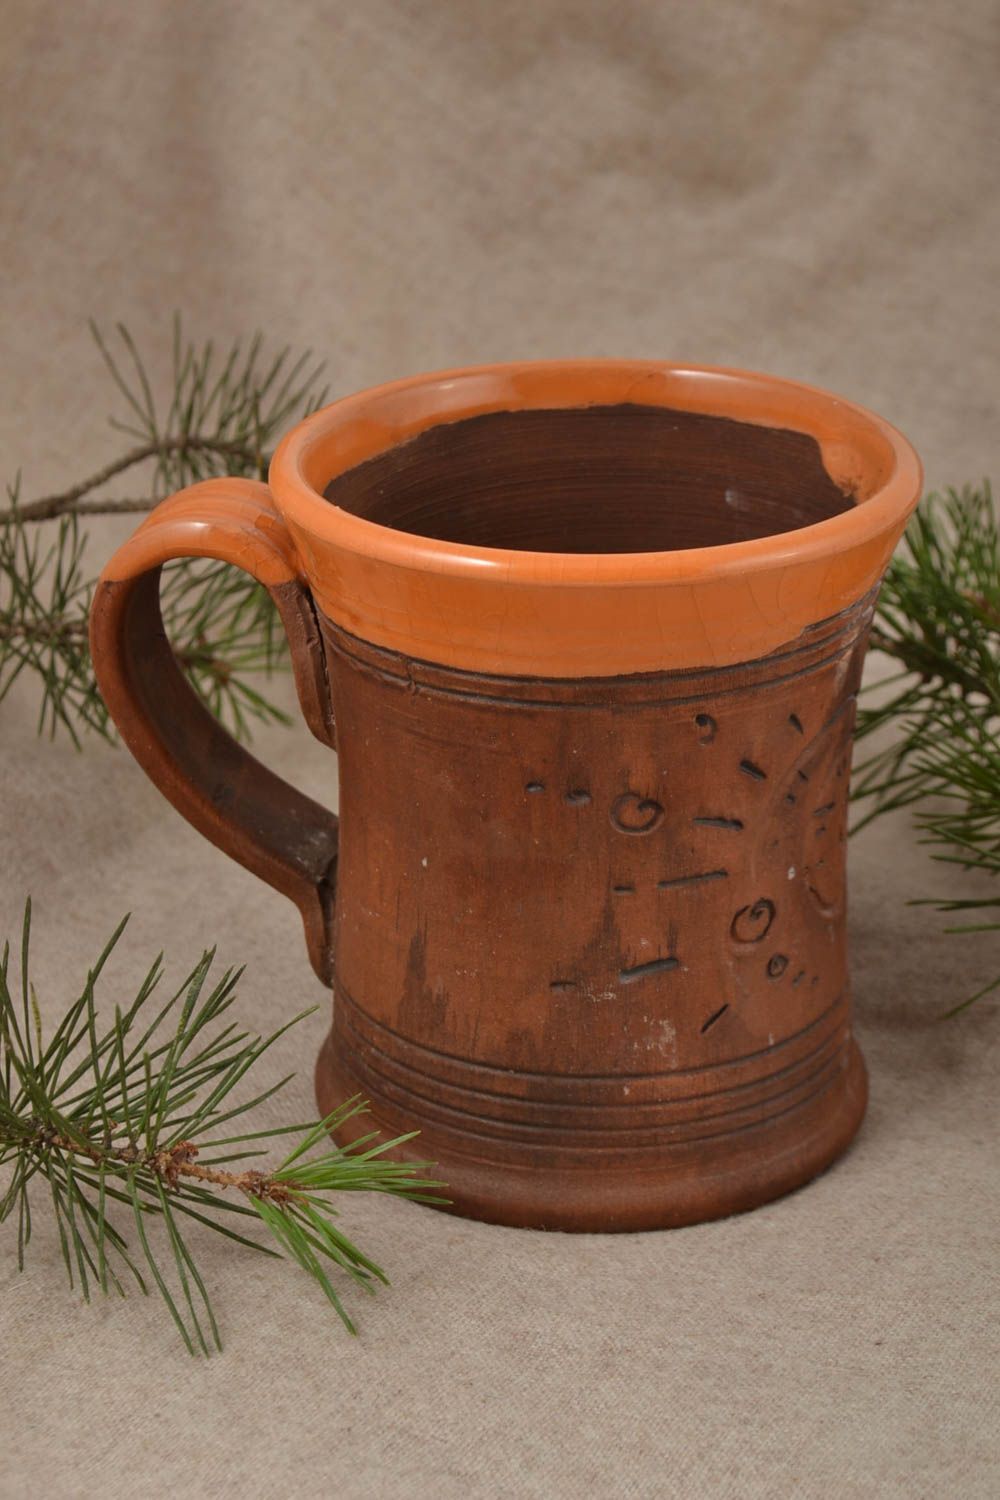 Unusual handmade ceramic beer mug table decor kitchen supplies gifts for him photo 1